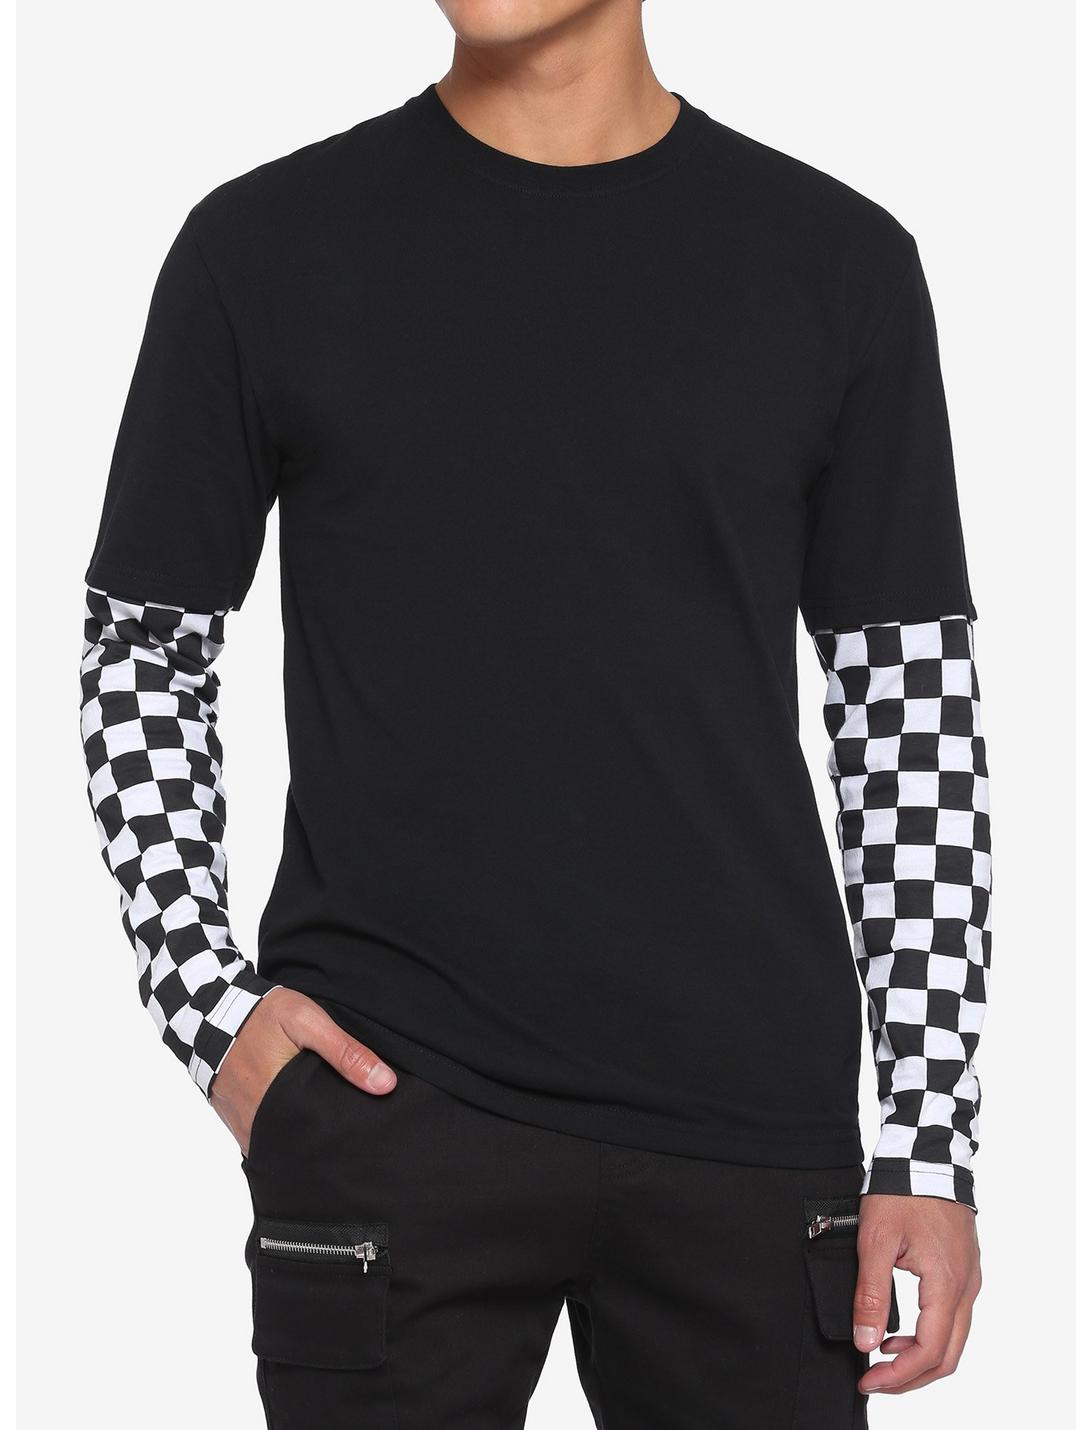 Black & White Checkered Sleeve Twofer Long-Sleeve T-Shirt, BLACK, hi-res